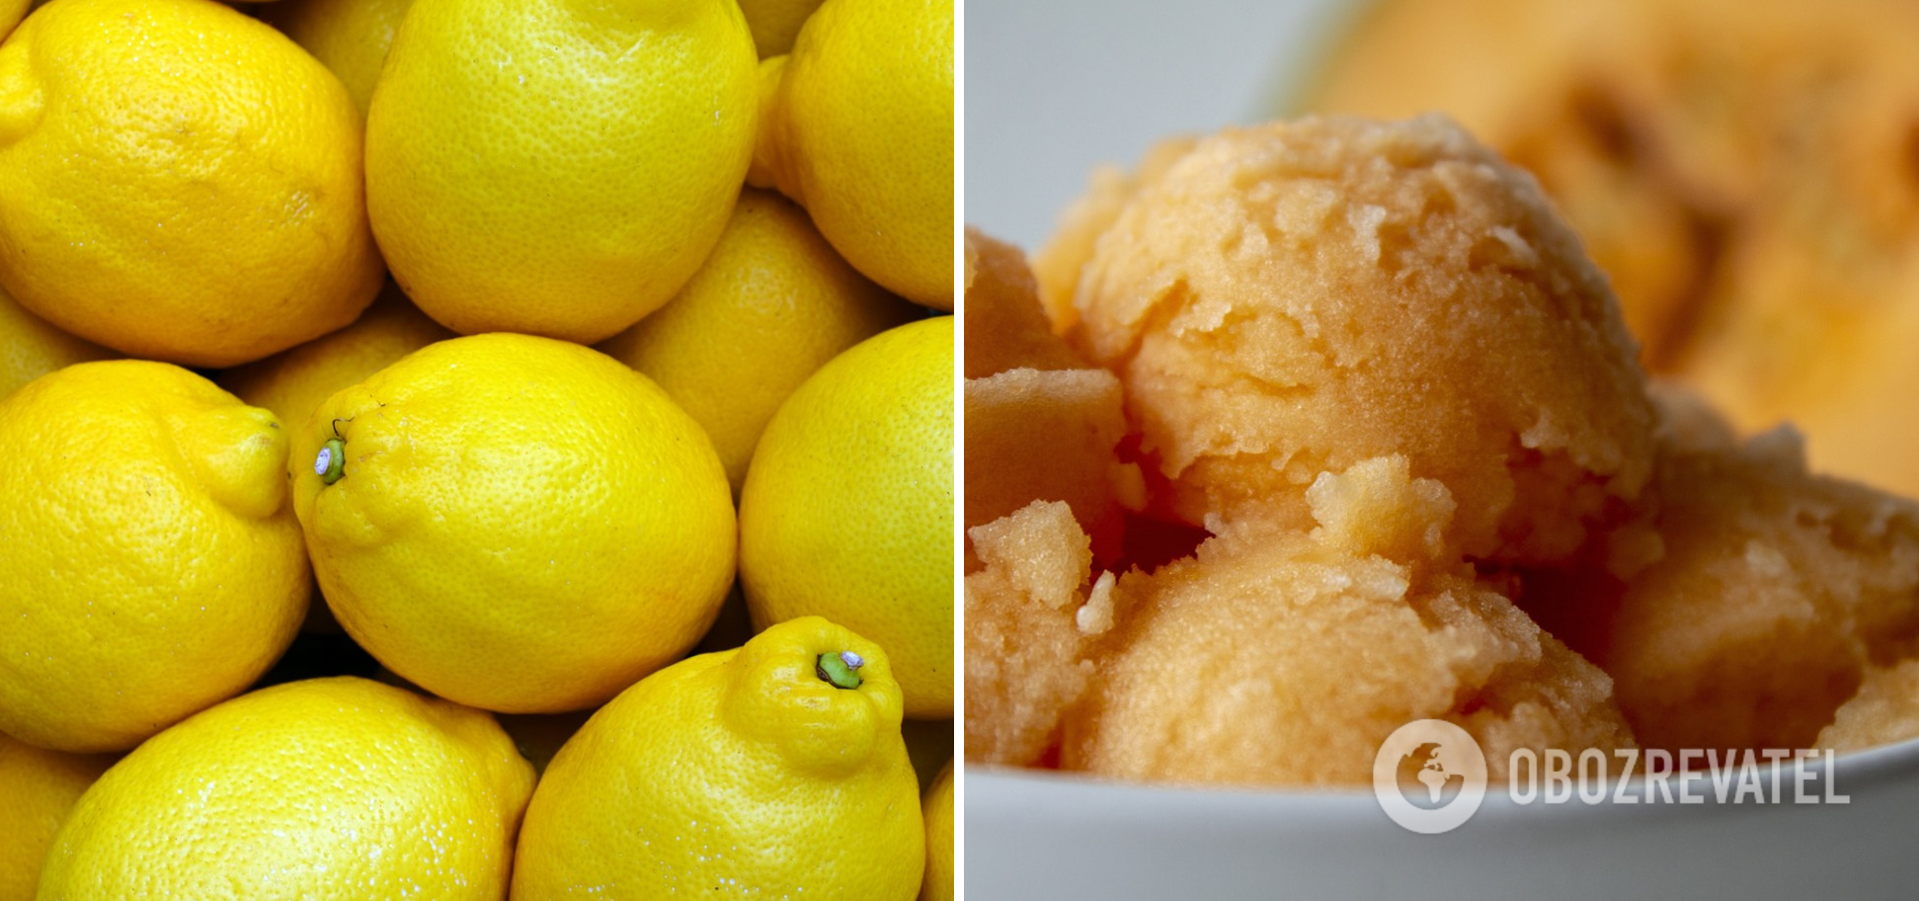 How to make lemon ice cream.